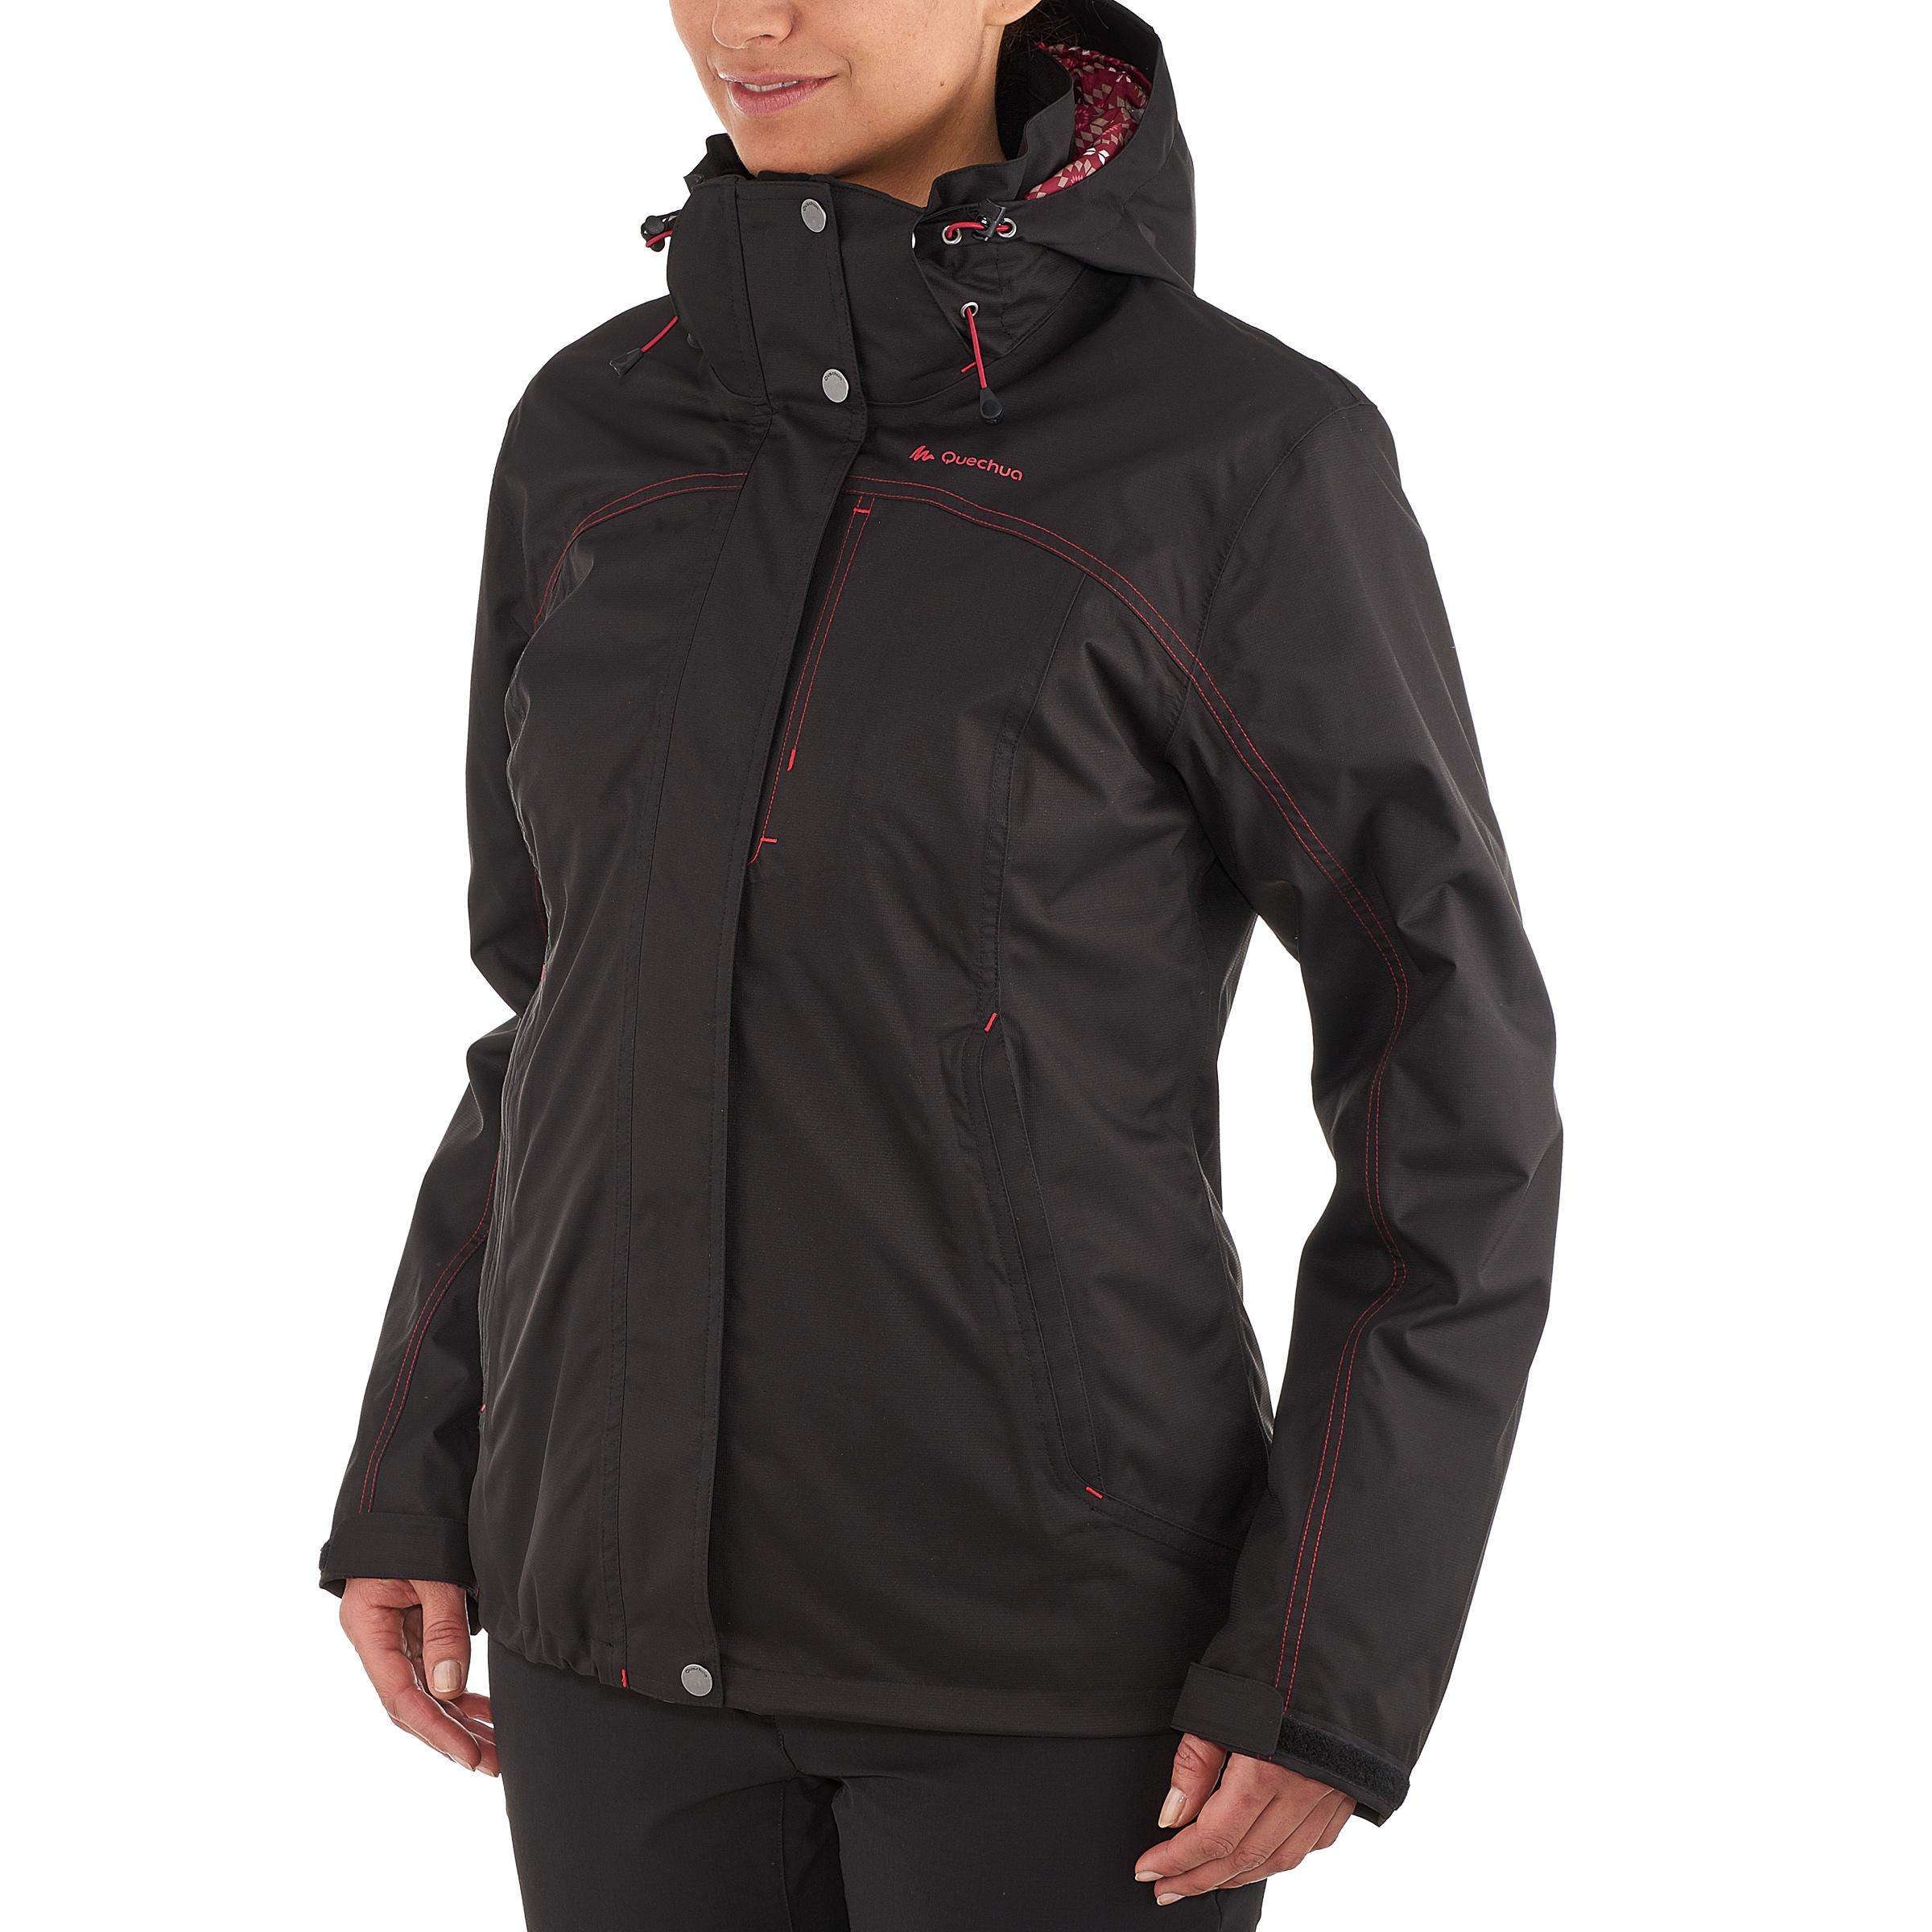 Rainwarm 100 Women's 3-in-1 Trekking Jacket - Black 3/26